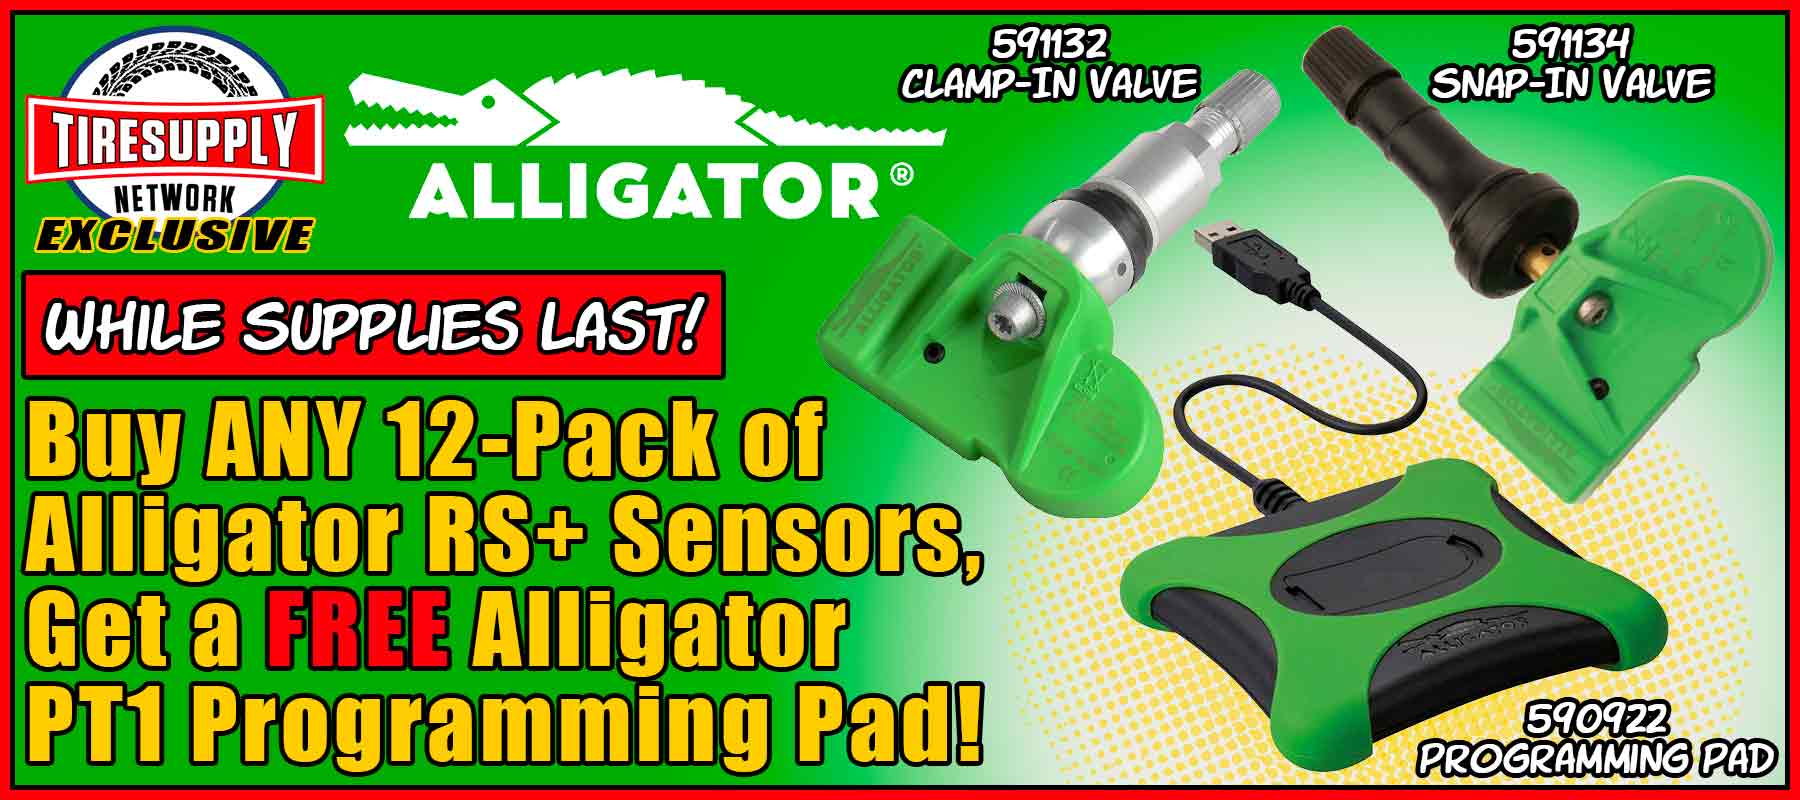 Buy ANY 12-Pack of Alligator RS+Sensors, Get an Alligator PT1 Programming Pad FREE!